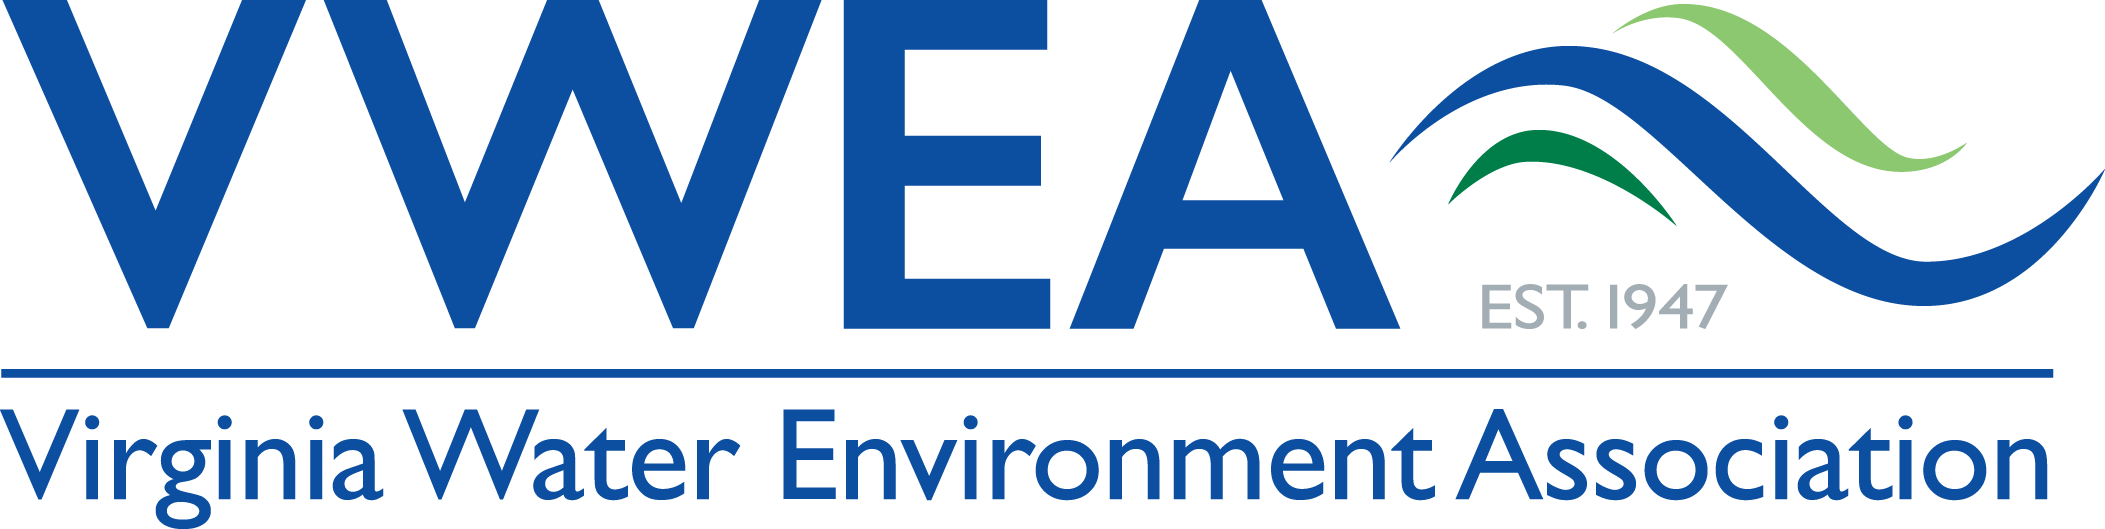 VWEA logo.png